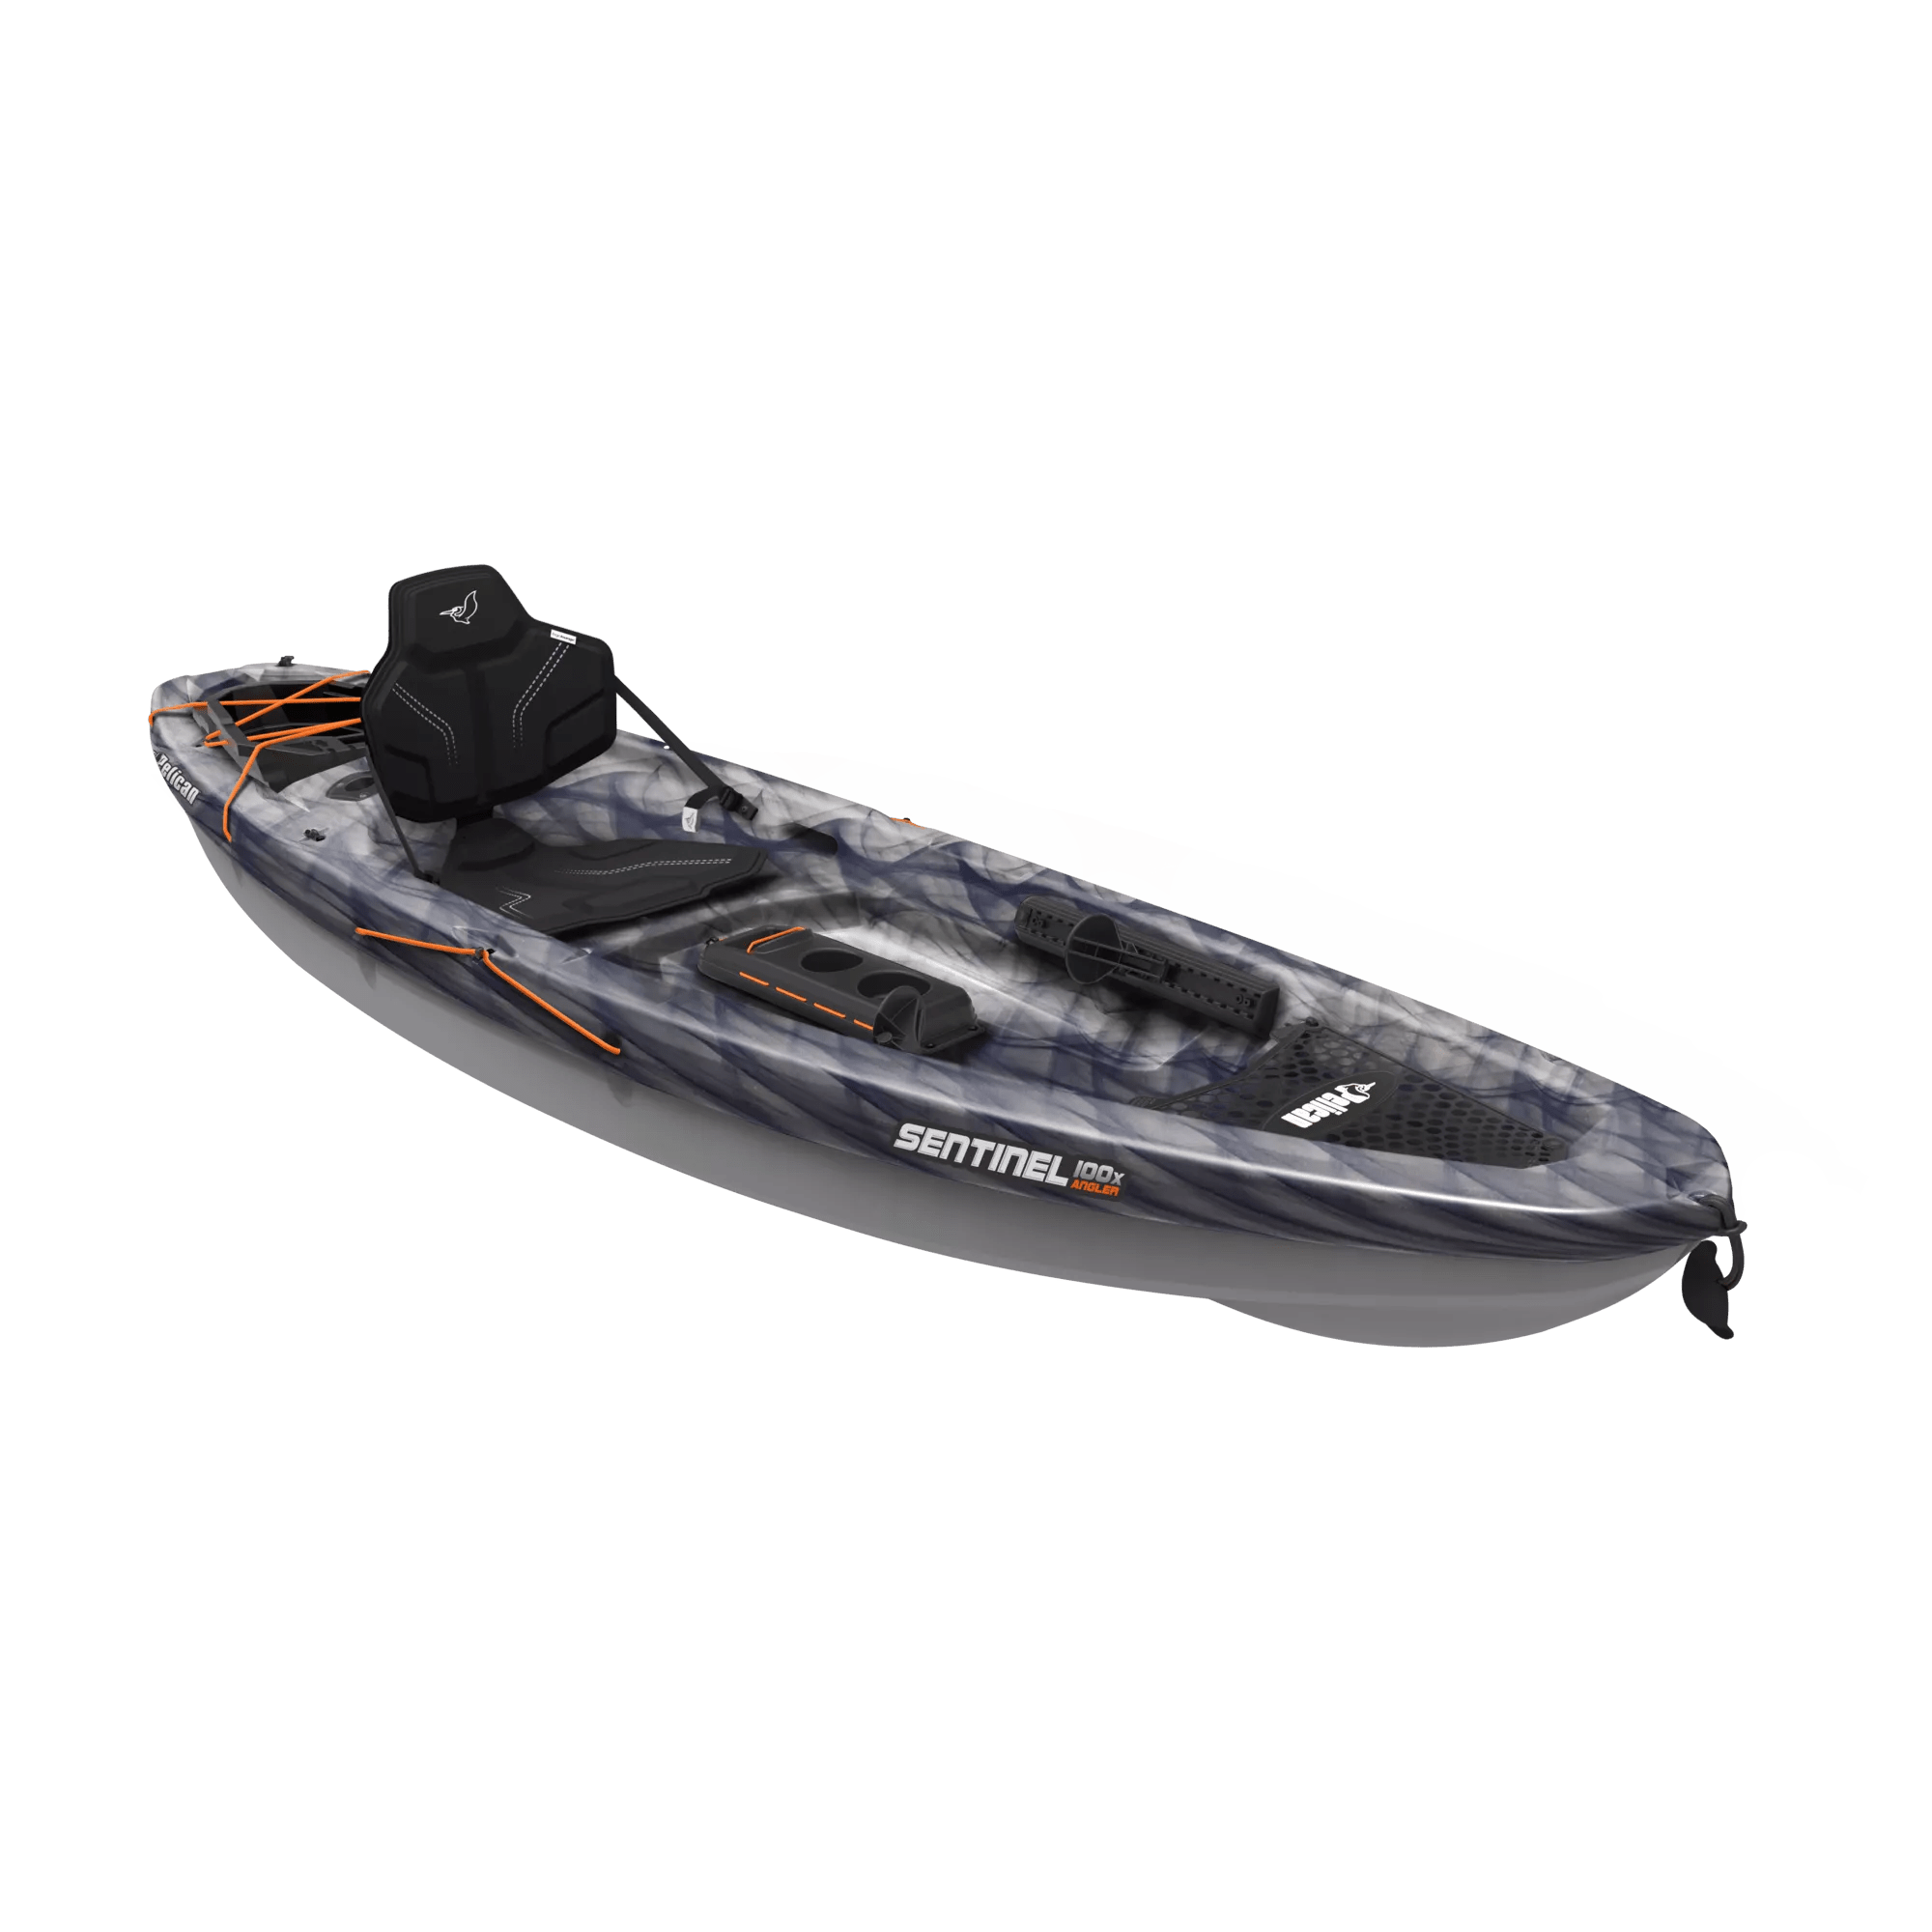 PELICAN - Sentinel 100X Angler Fishing Kayak - Black - MBF10P104-00 - ISO 